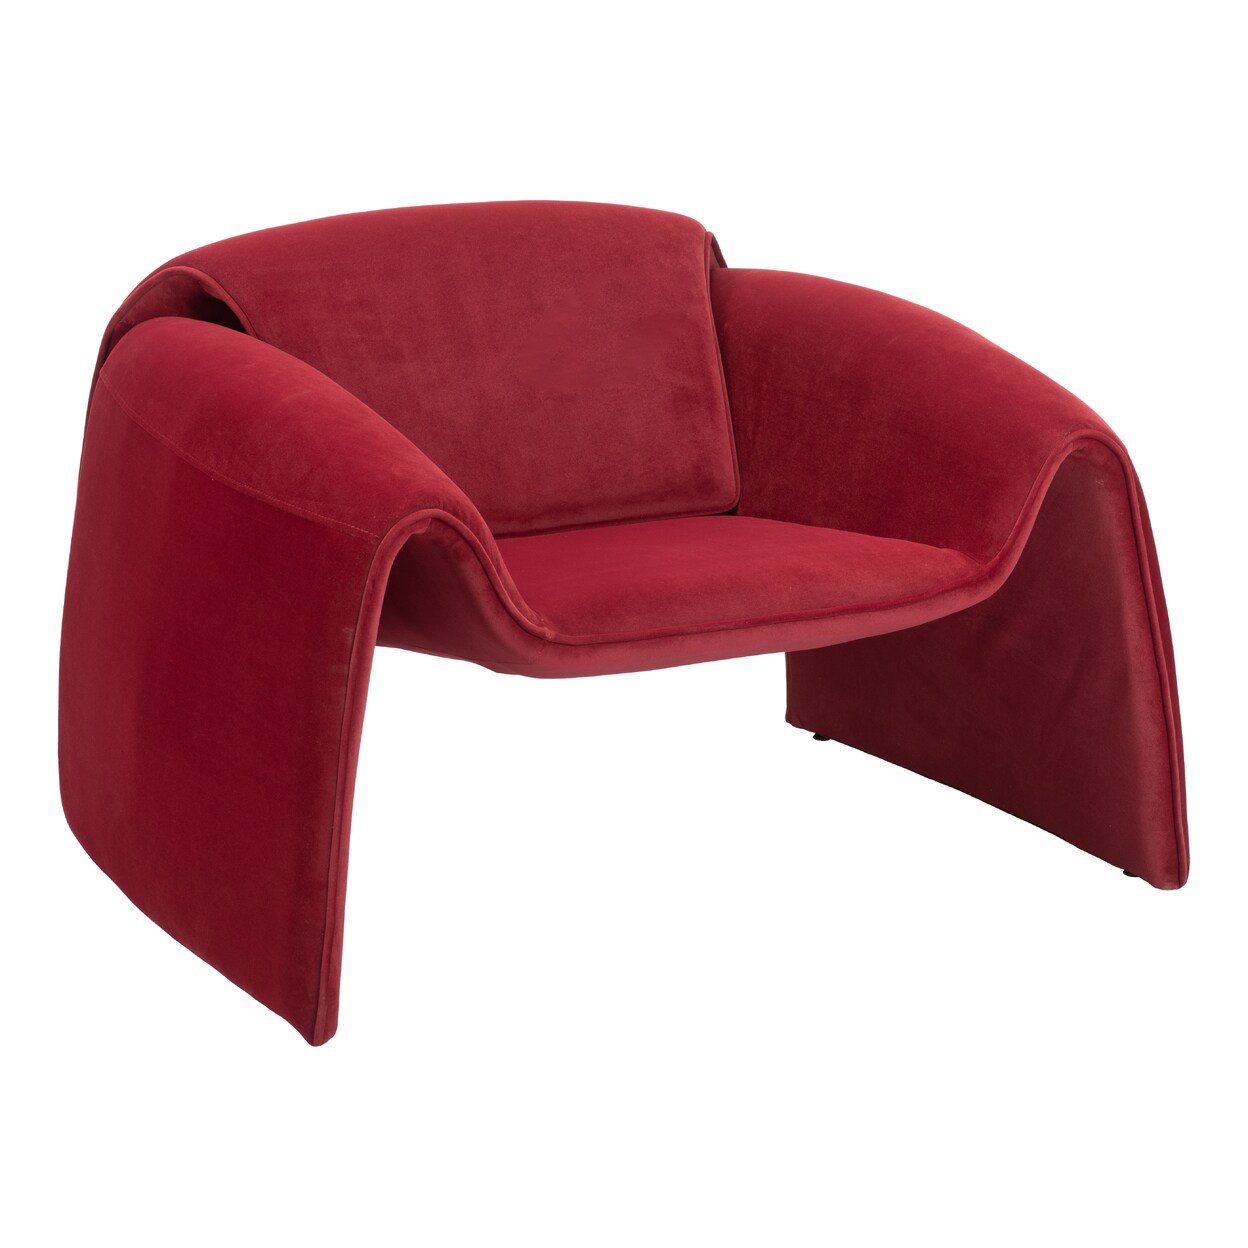 Zuo Modern Contemporary Inc. Horten Accent Chair Red